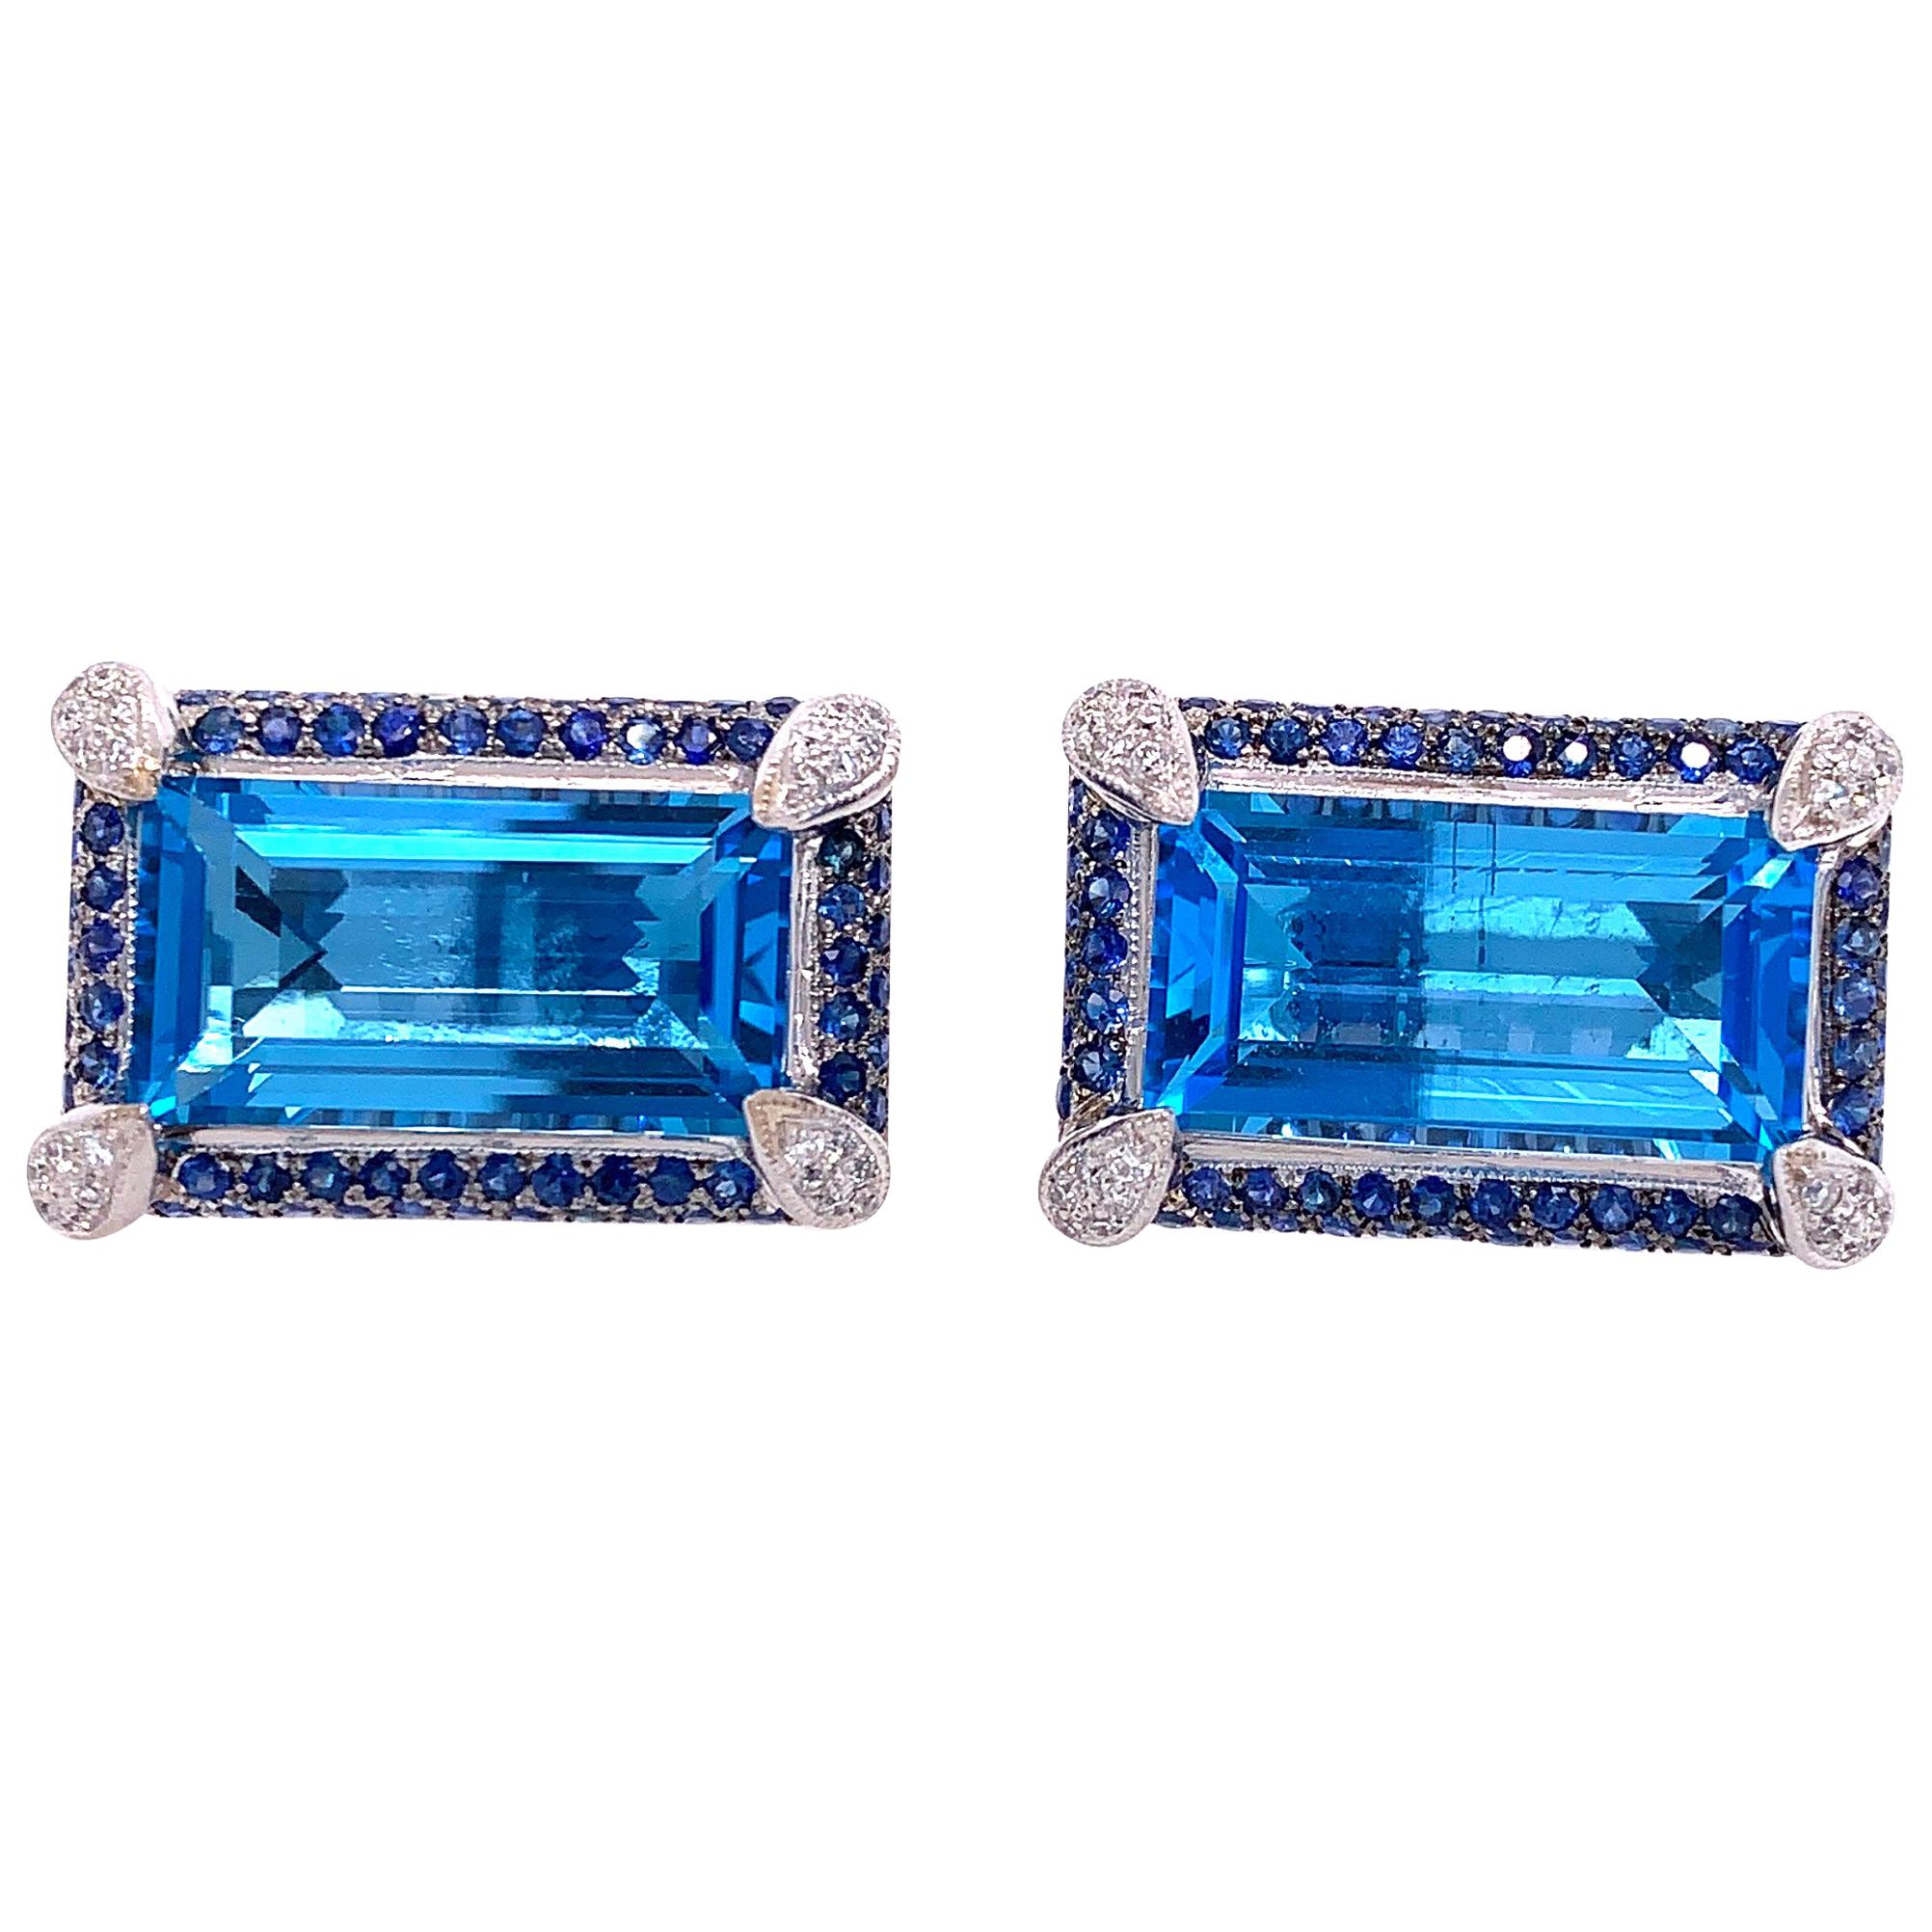 Emerald Cut Topaz, Blue Sapphire and Diamond Cufflinks